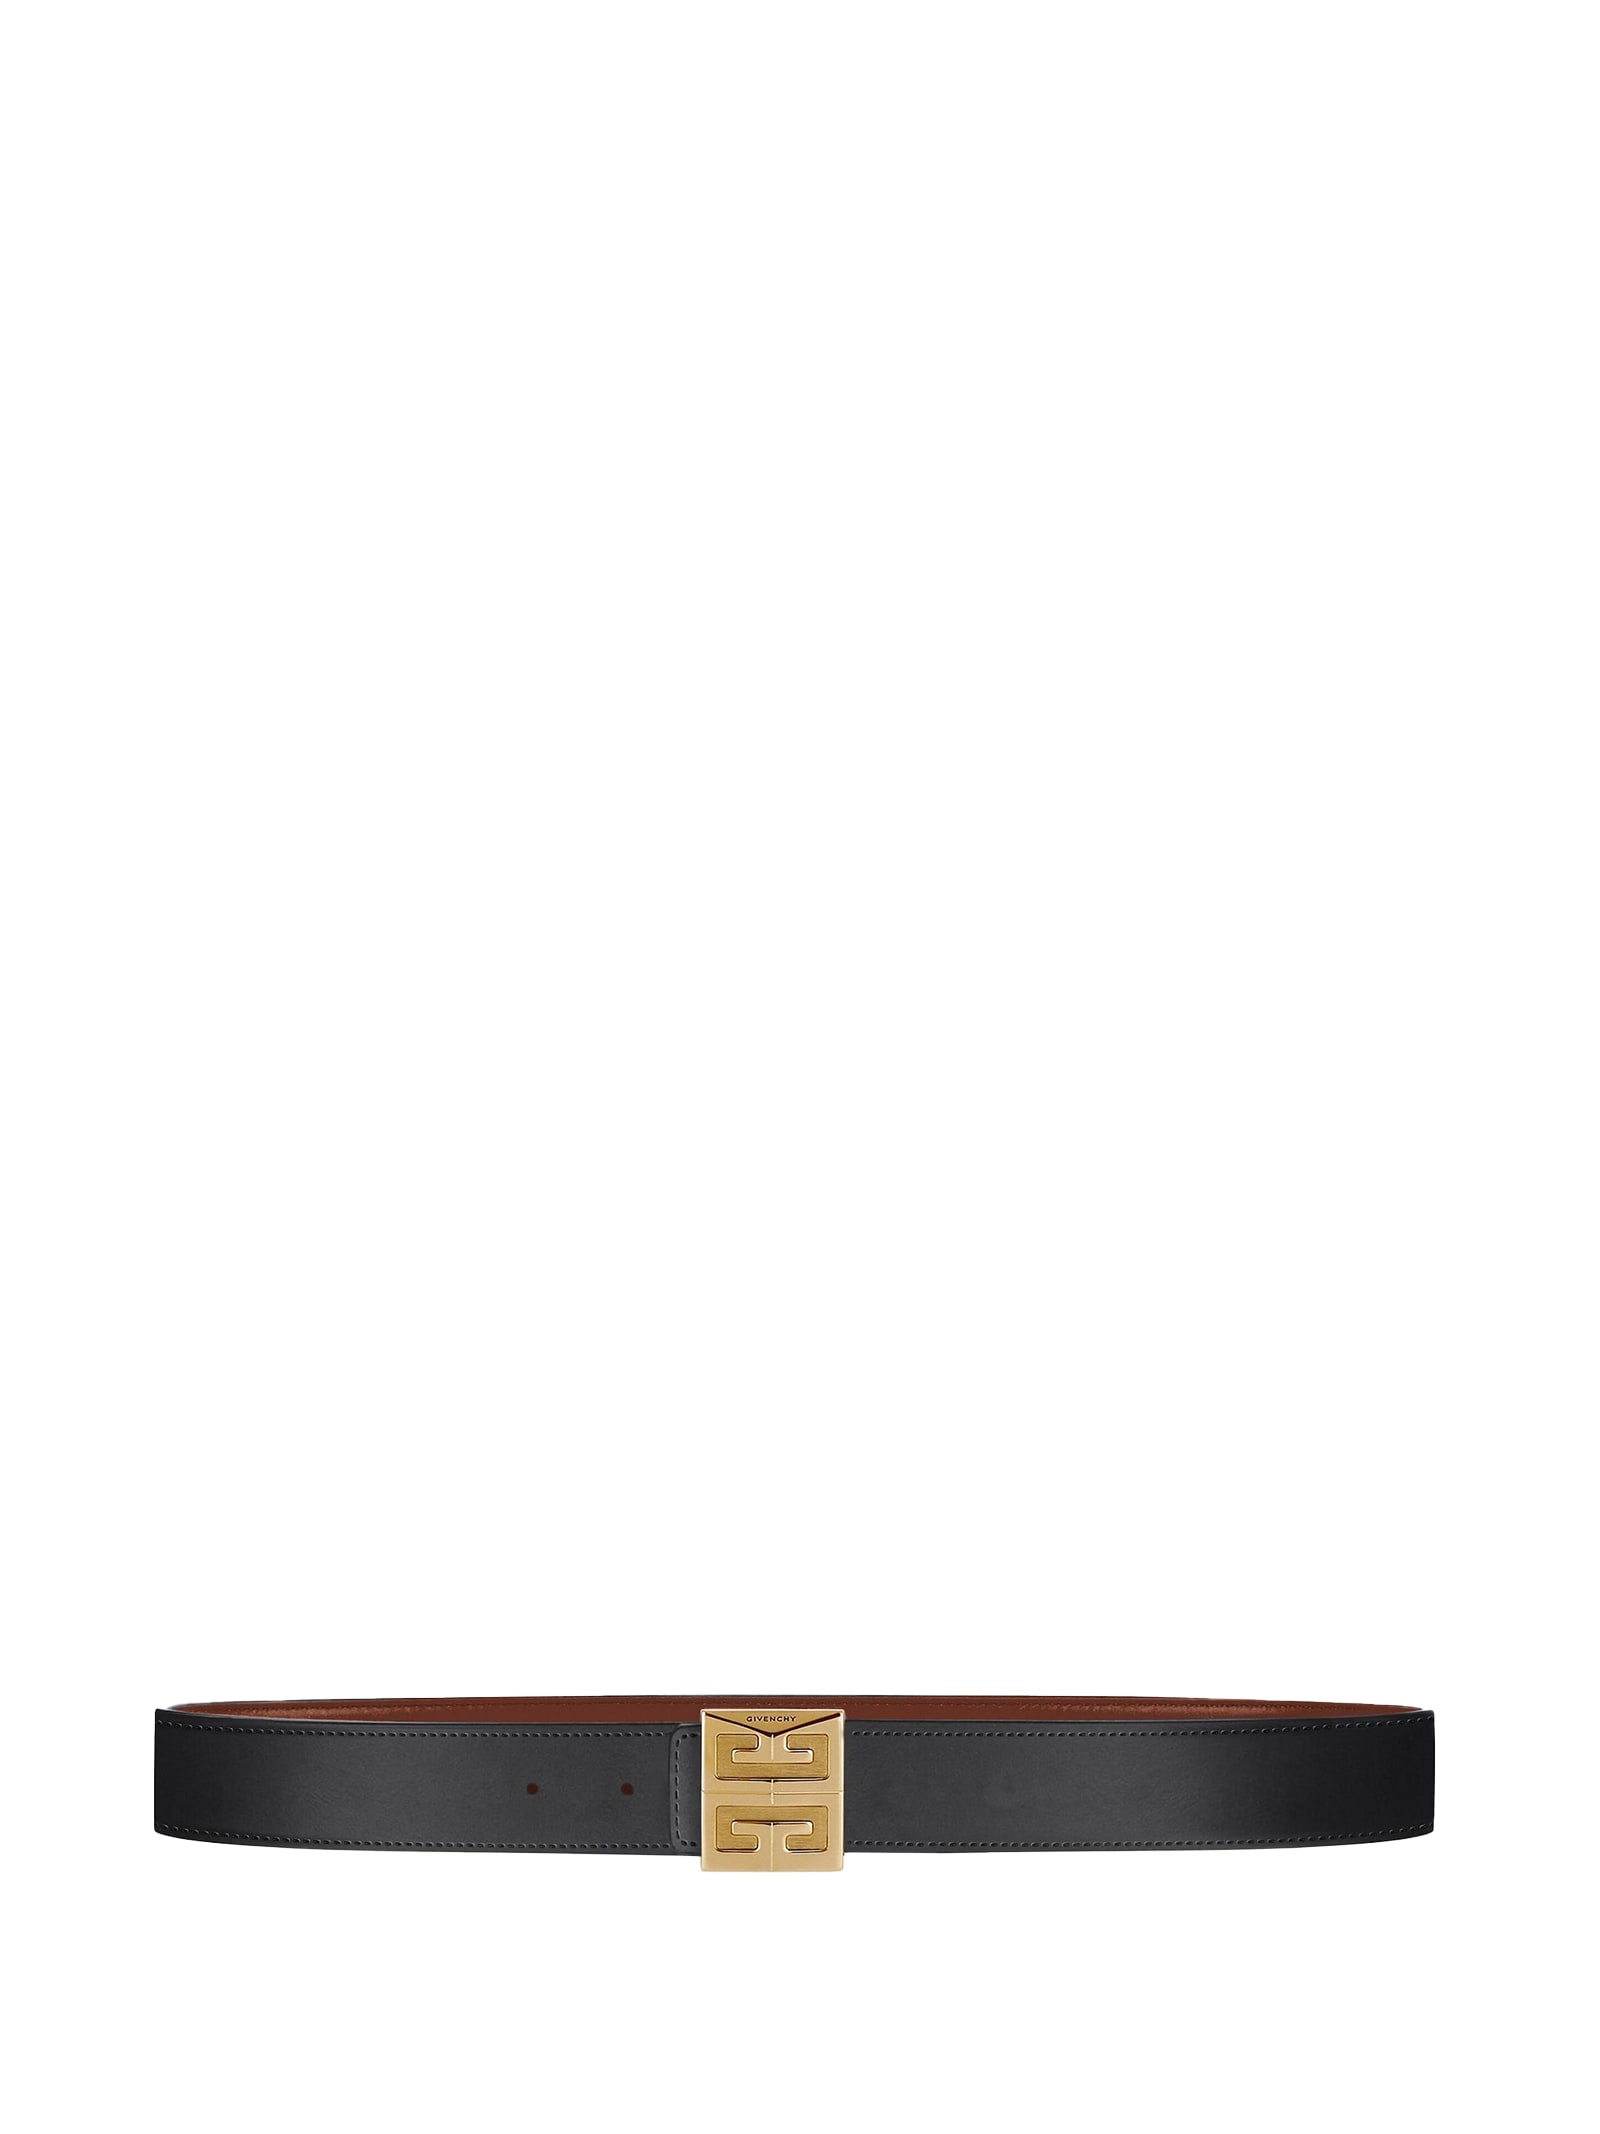 Givenchy Belt In Brown Black